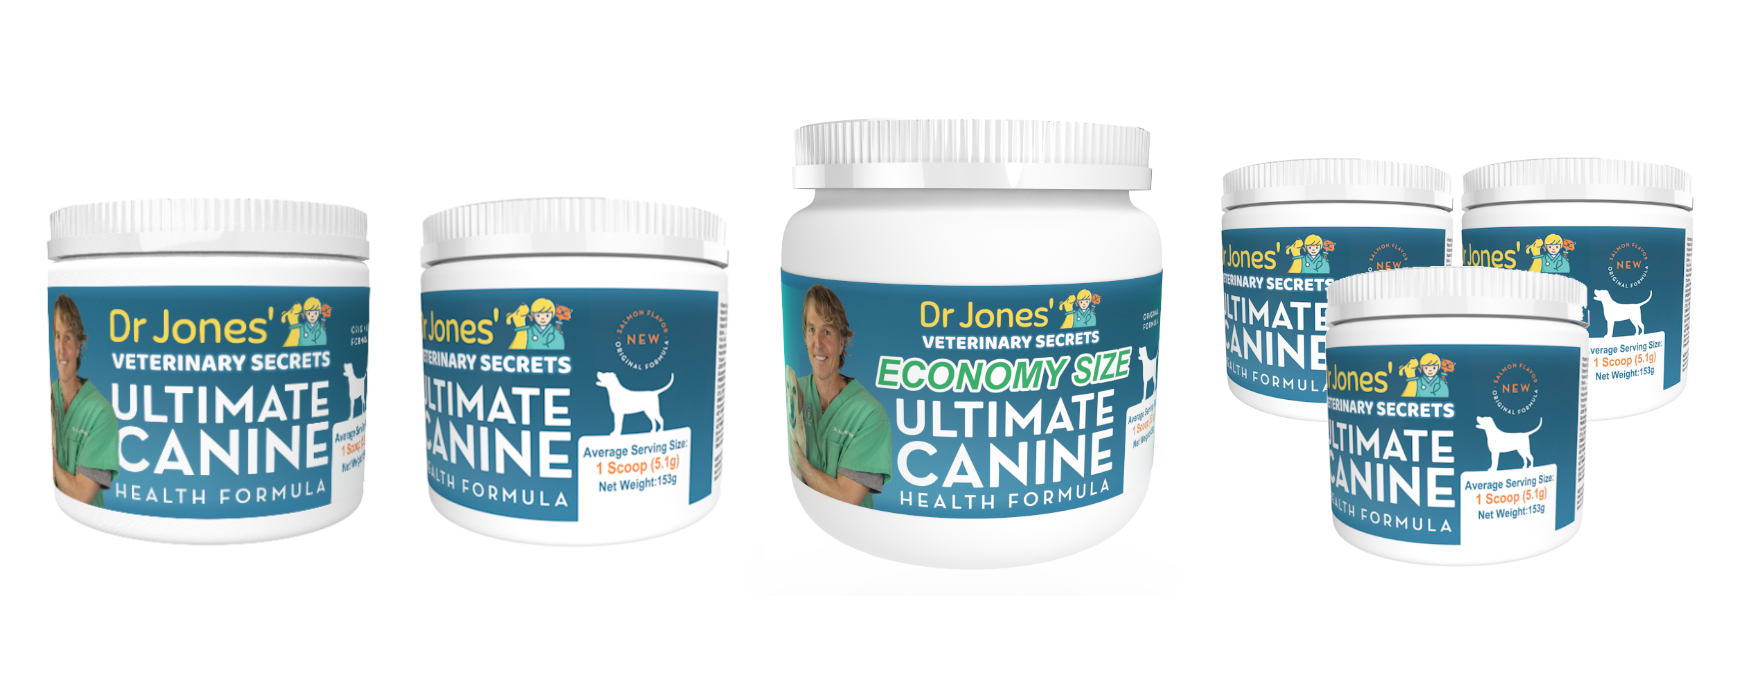 Dr. Jones' Ultimate Canine Health Formula (Original Formula)